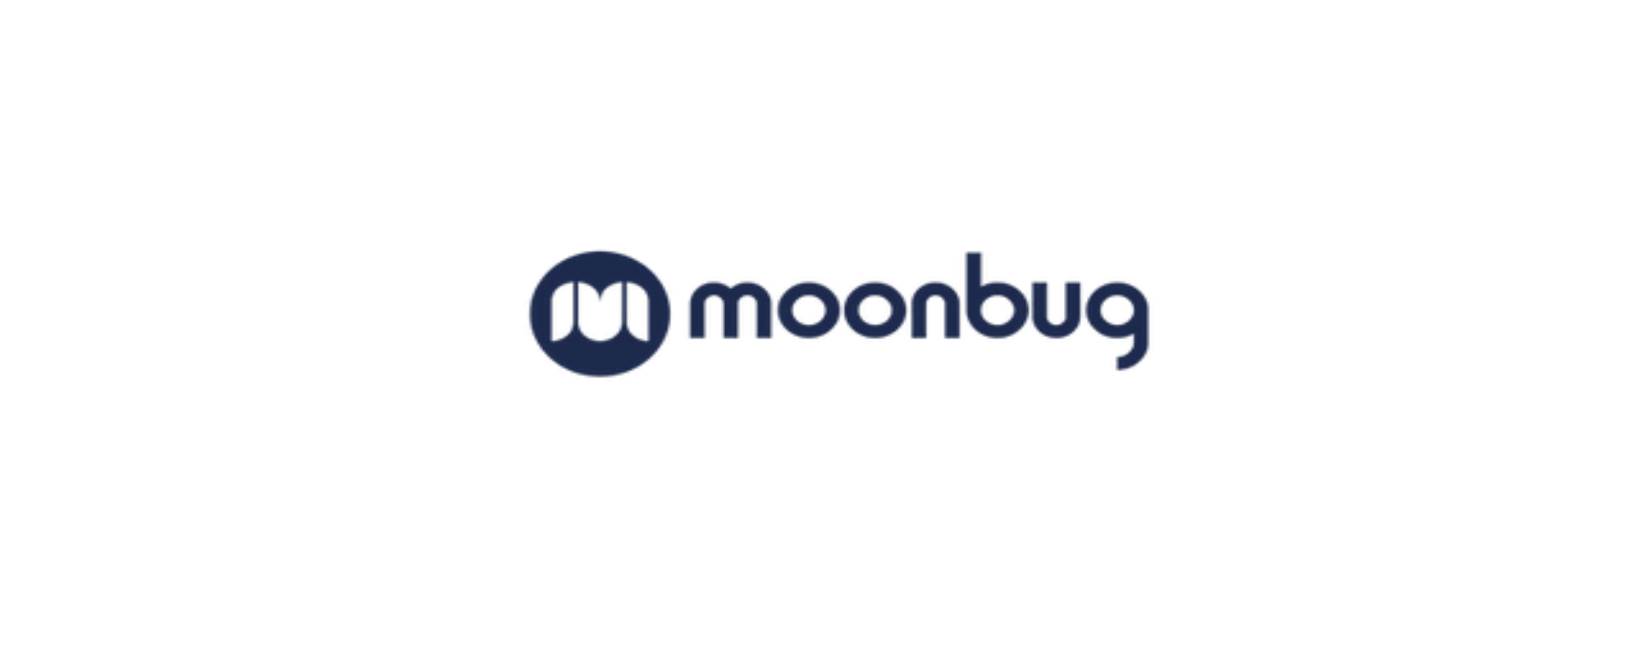 Moonbug Discount Code 2023